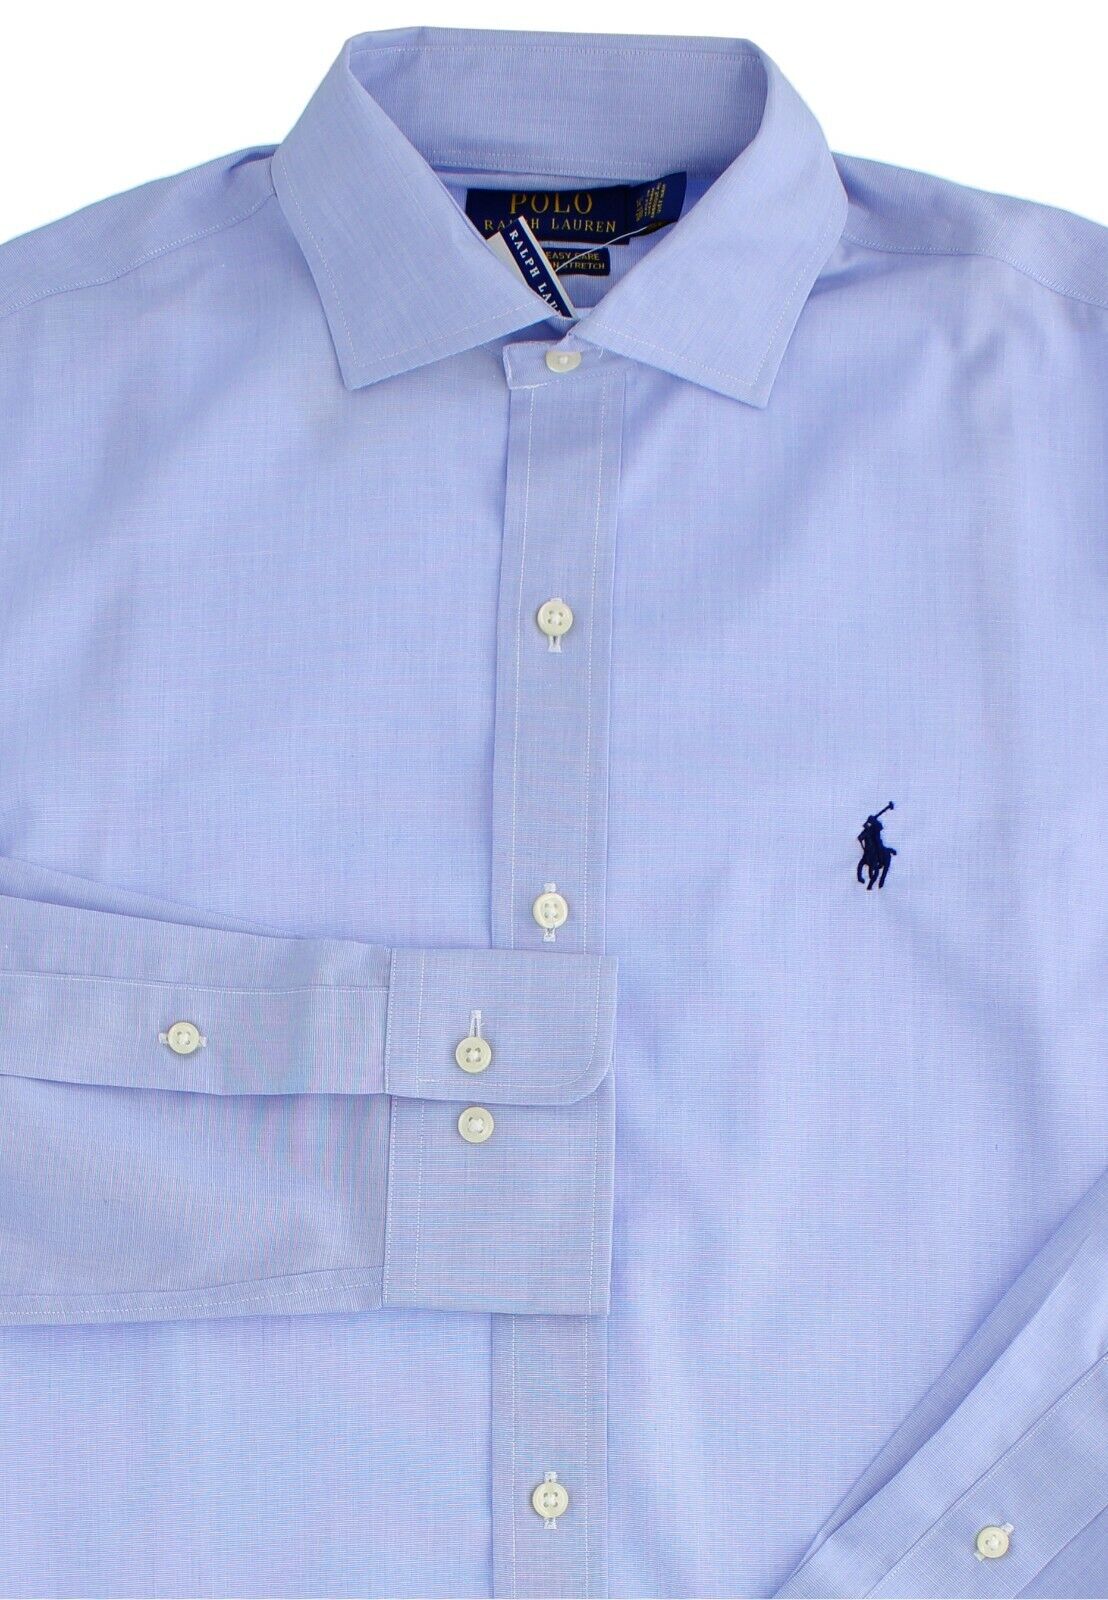 POLO Ralph Lauren Poplin Shirt Men's Slim Fit 100% Cotton Easy Care MSRP $79